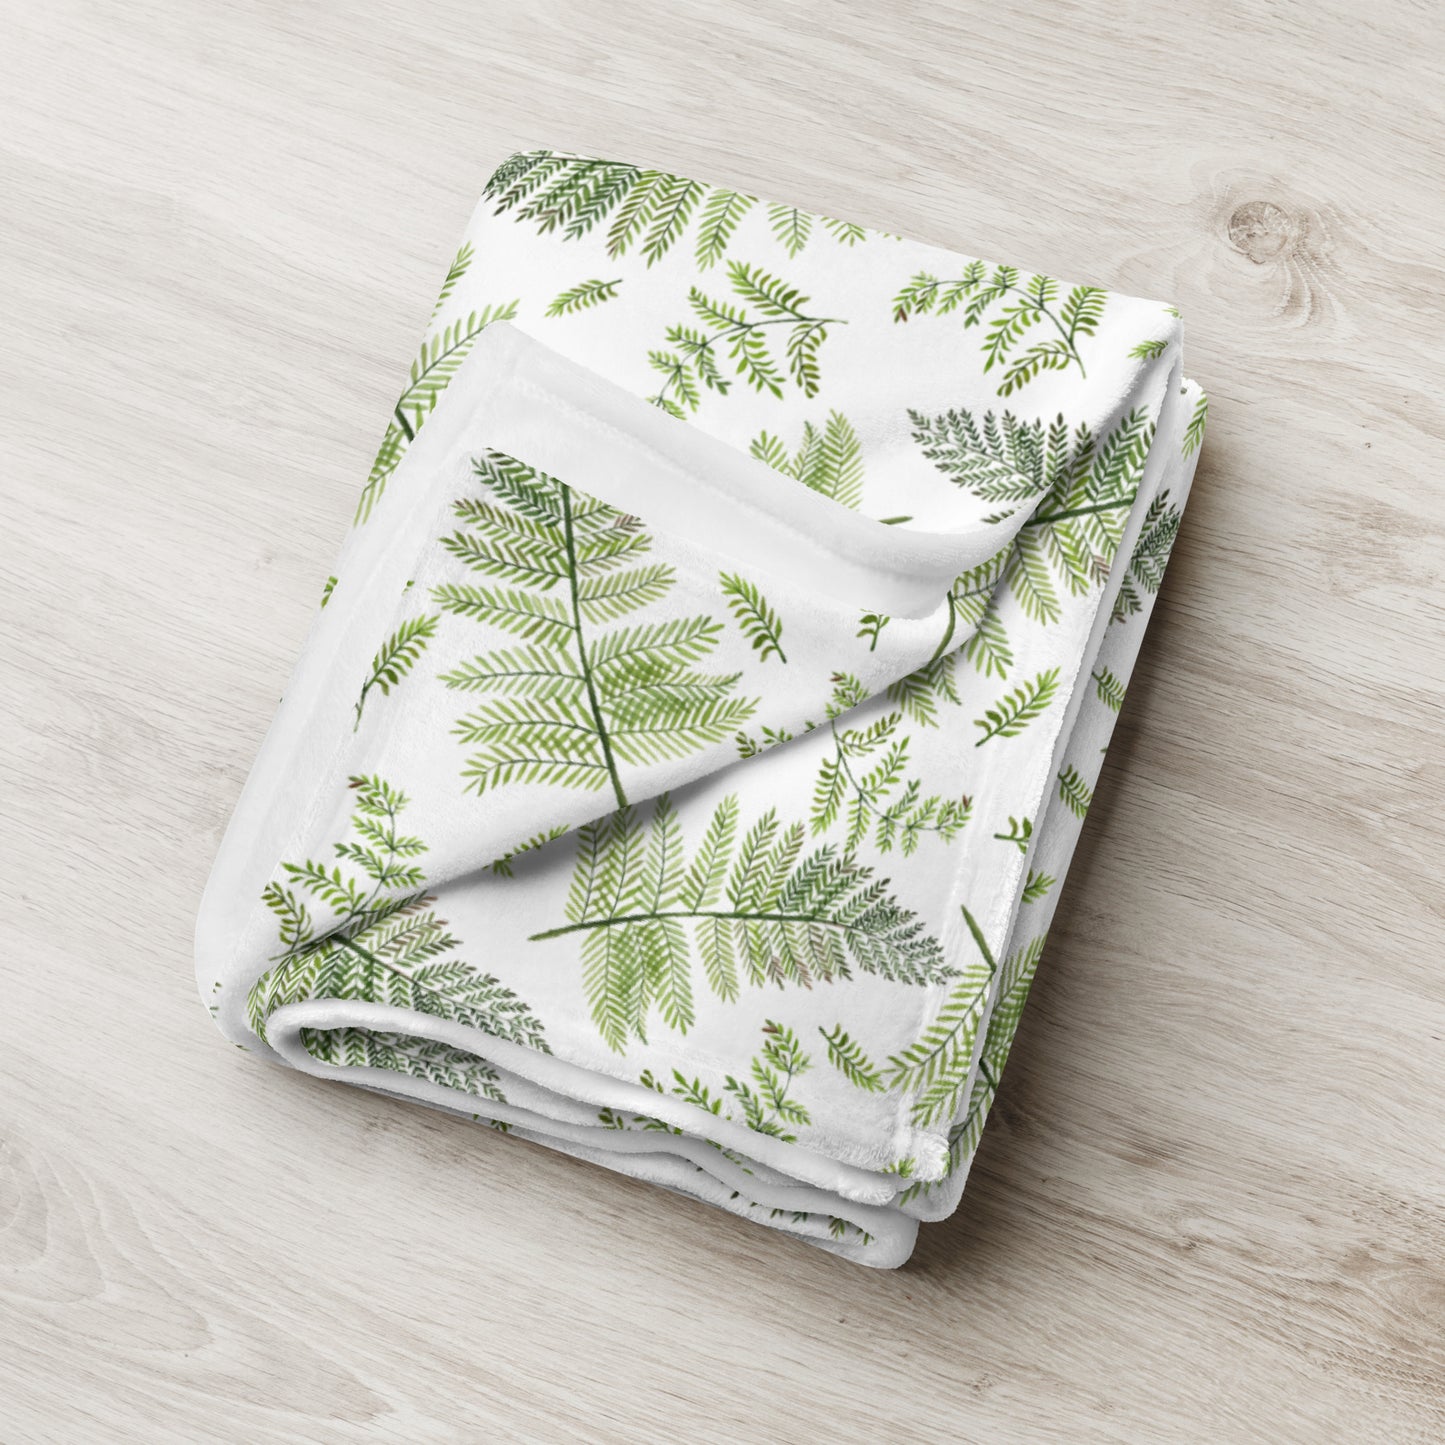 Blanket 'Botanical Ferns' 127x153cm | Green Academy